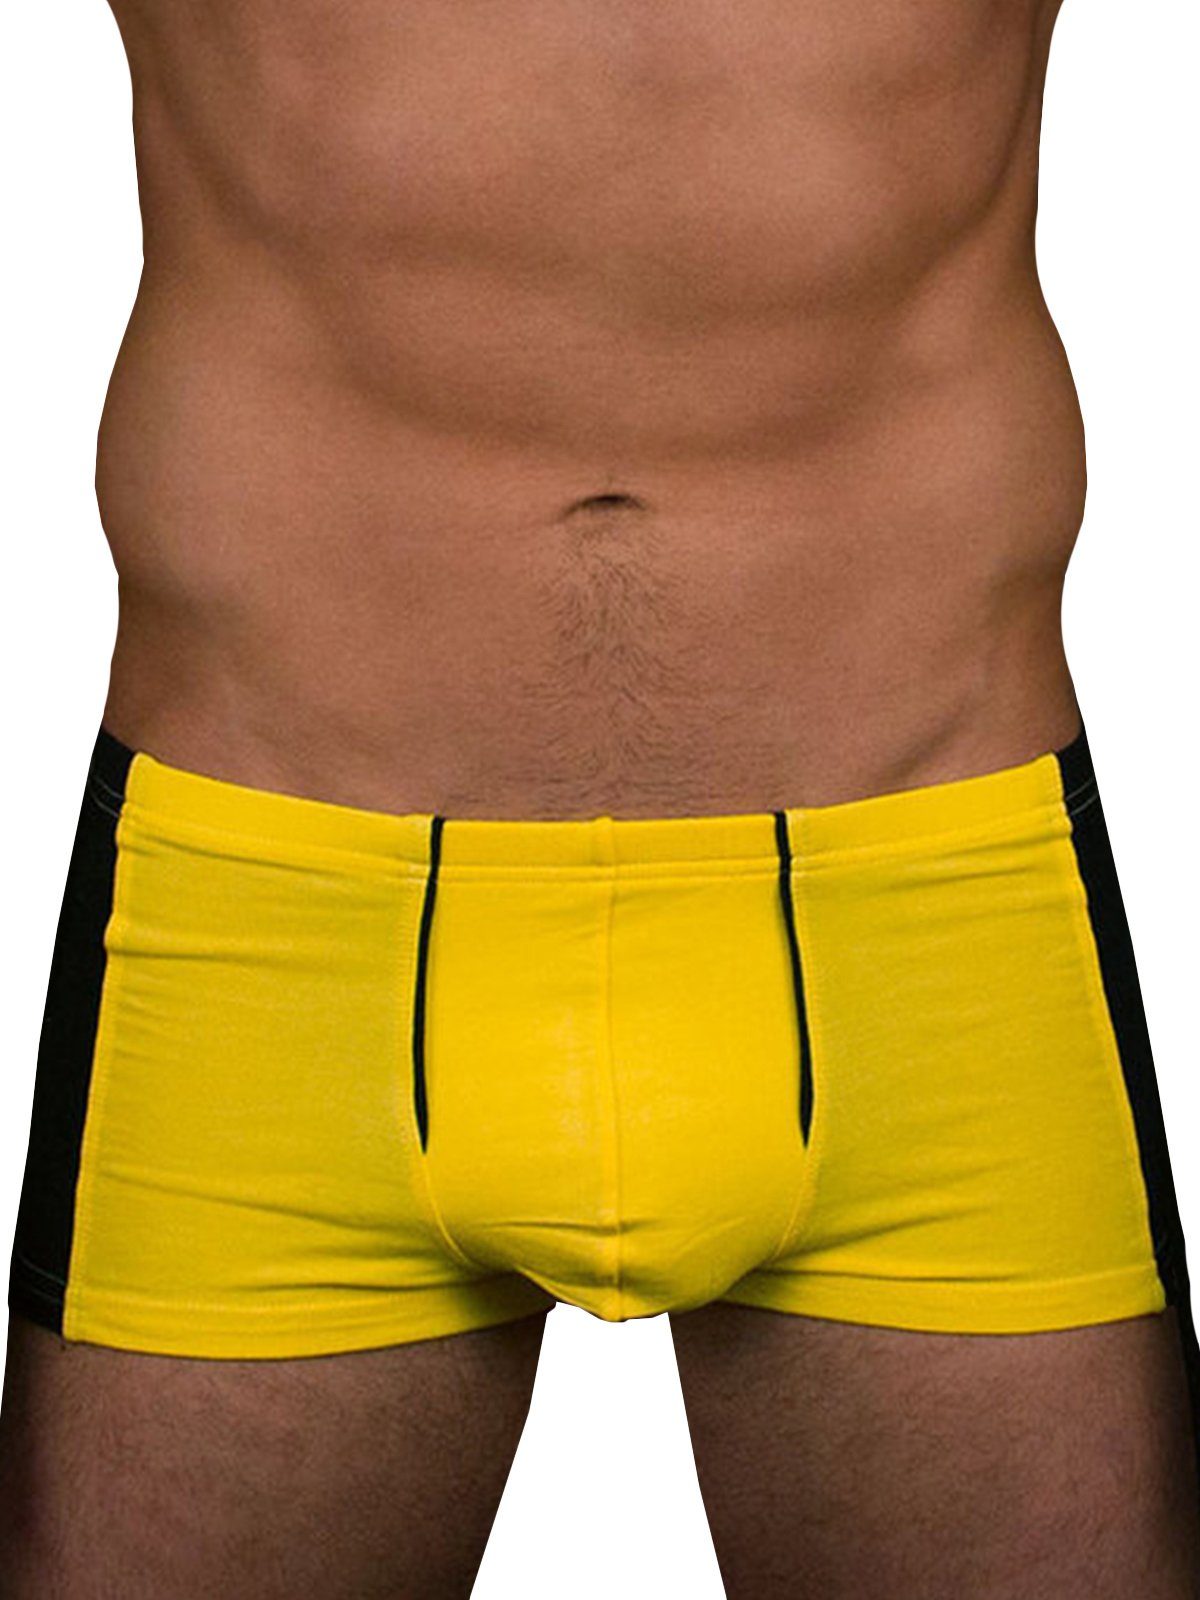 Doreanse Underwear Hipster Herren original Gelb Pants, Boxer Doreanse Männer Trunk DA1599